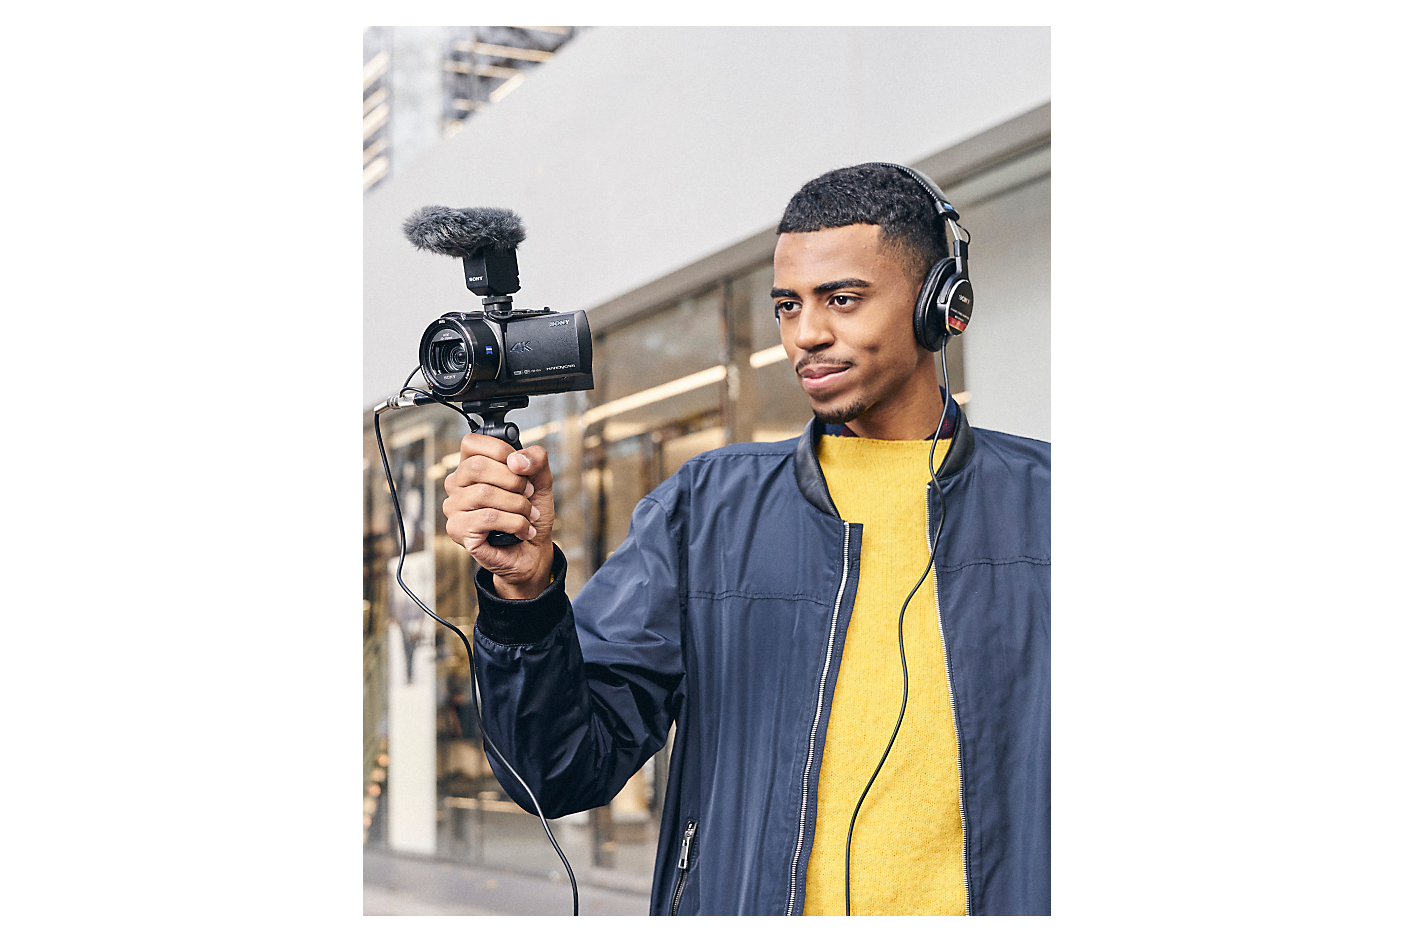 Muškarac sa slušalicama drži Sonyjev fotoaparat s držačem za snimanje i mikrofonom.